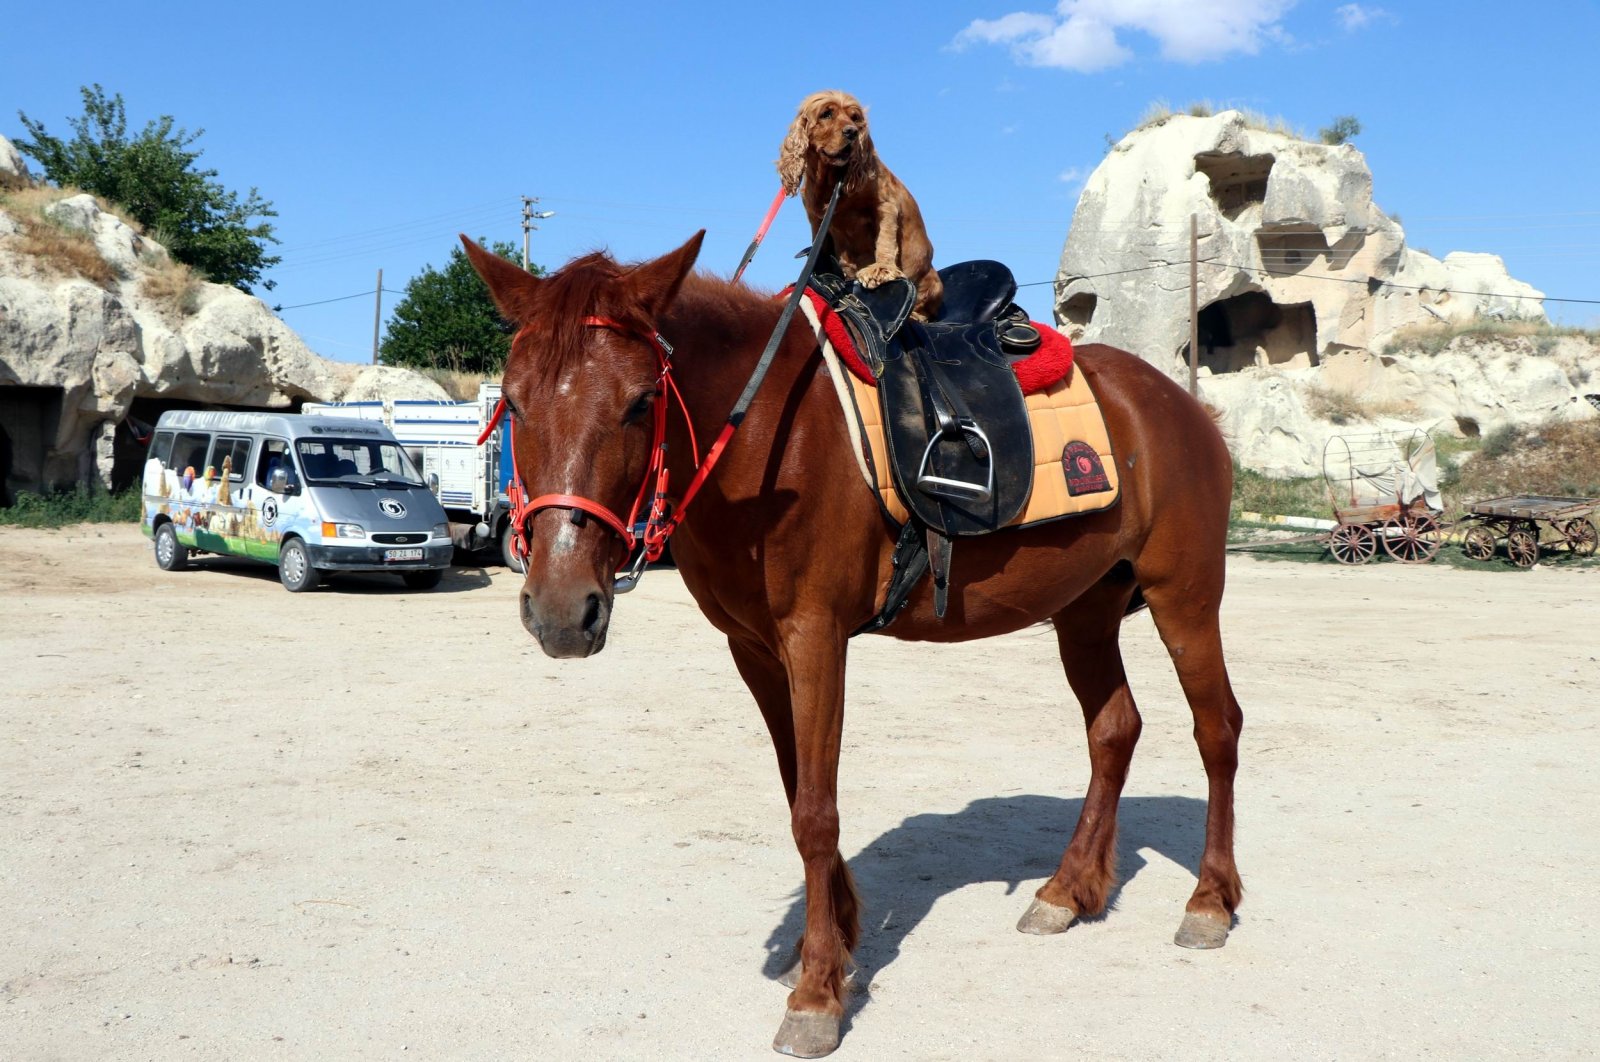 Boncuk rides a horse in Cappadocia, Nevşehir, Turkey, June 22, 2020. (IHA Photo)